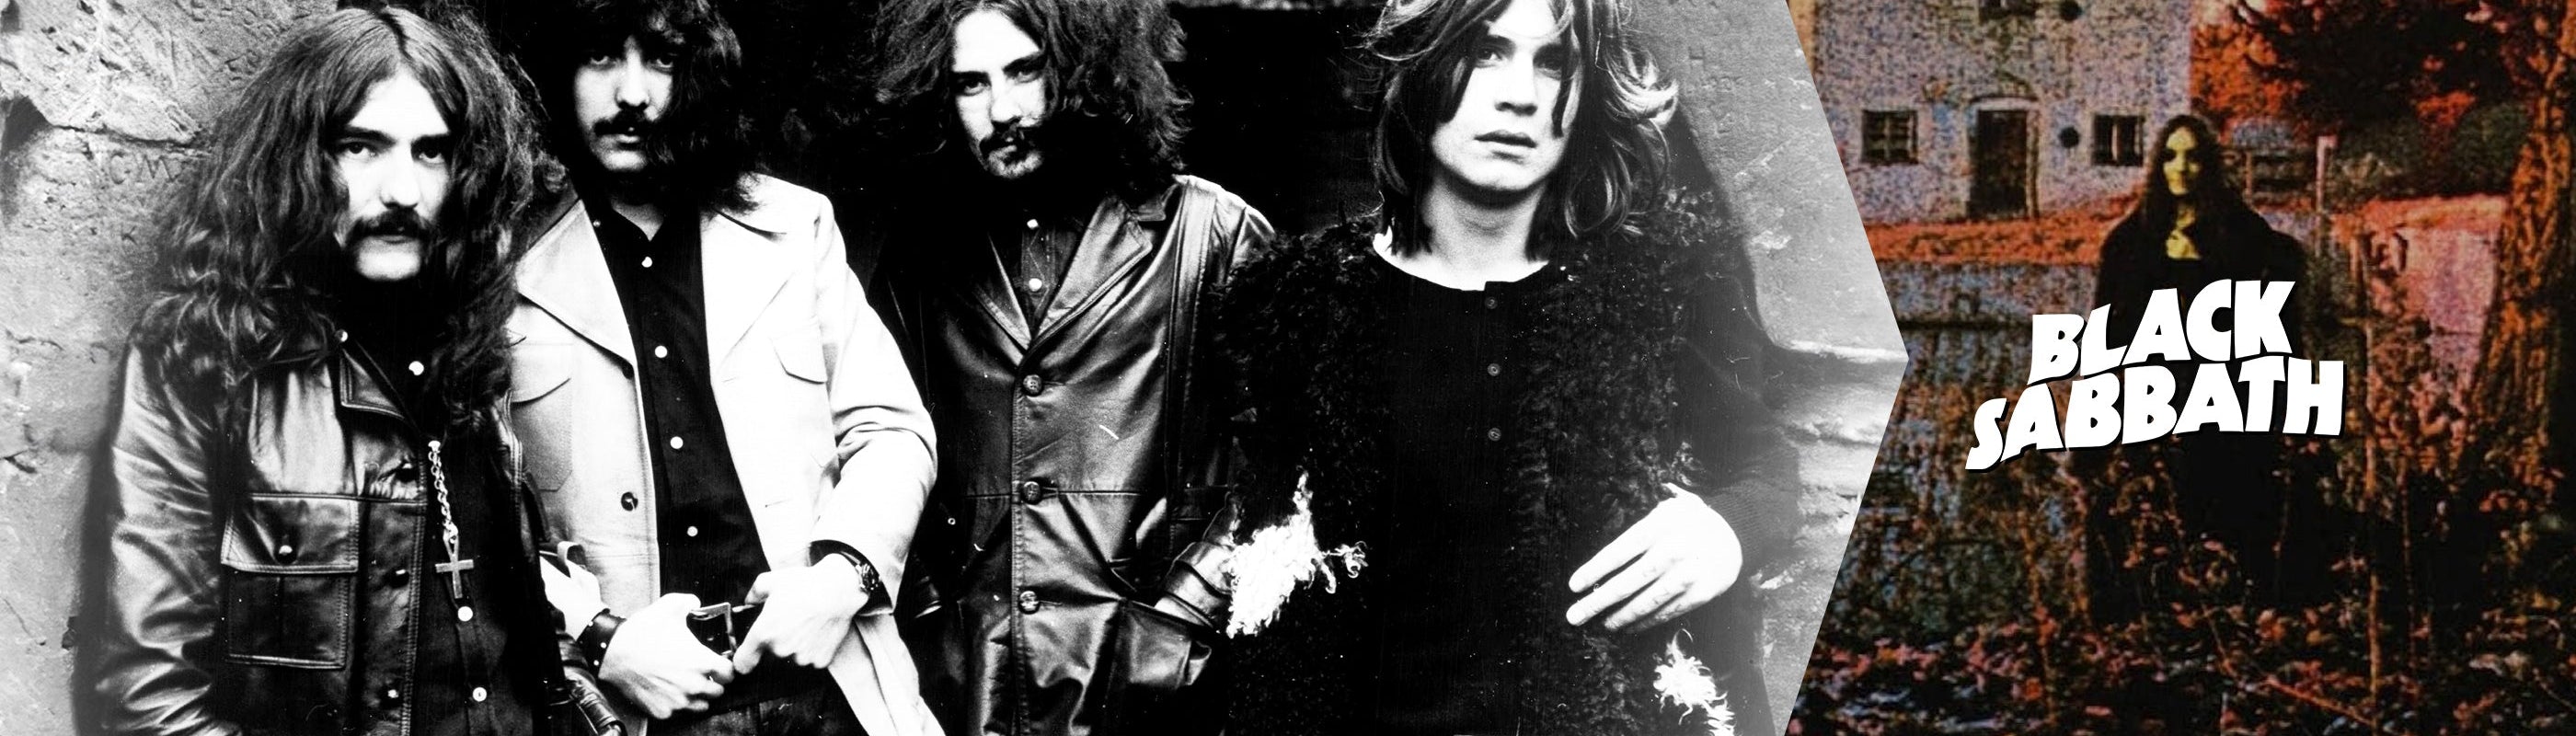 Black Sabbath - Header